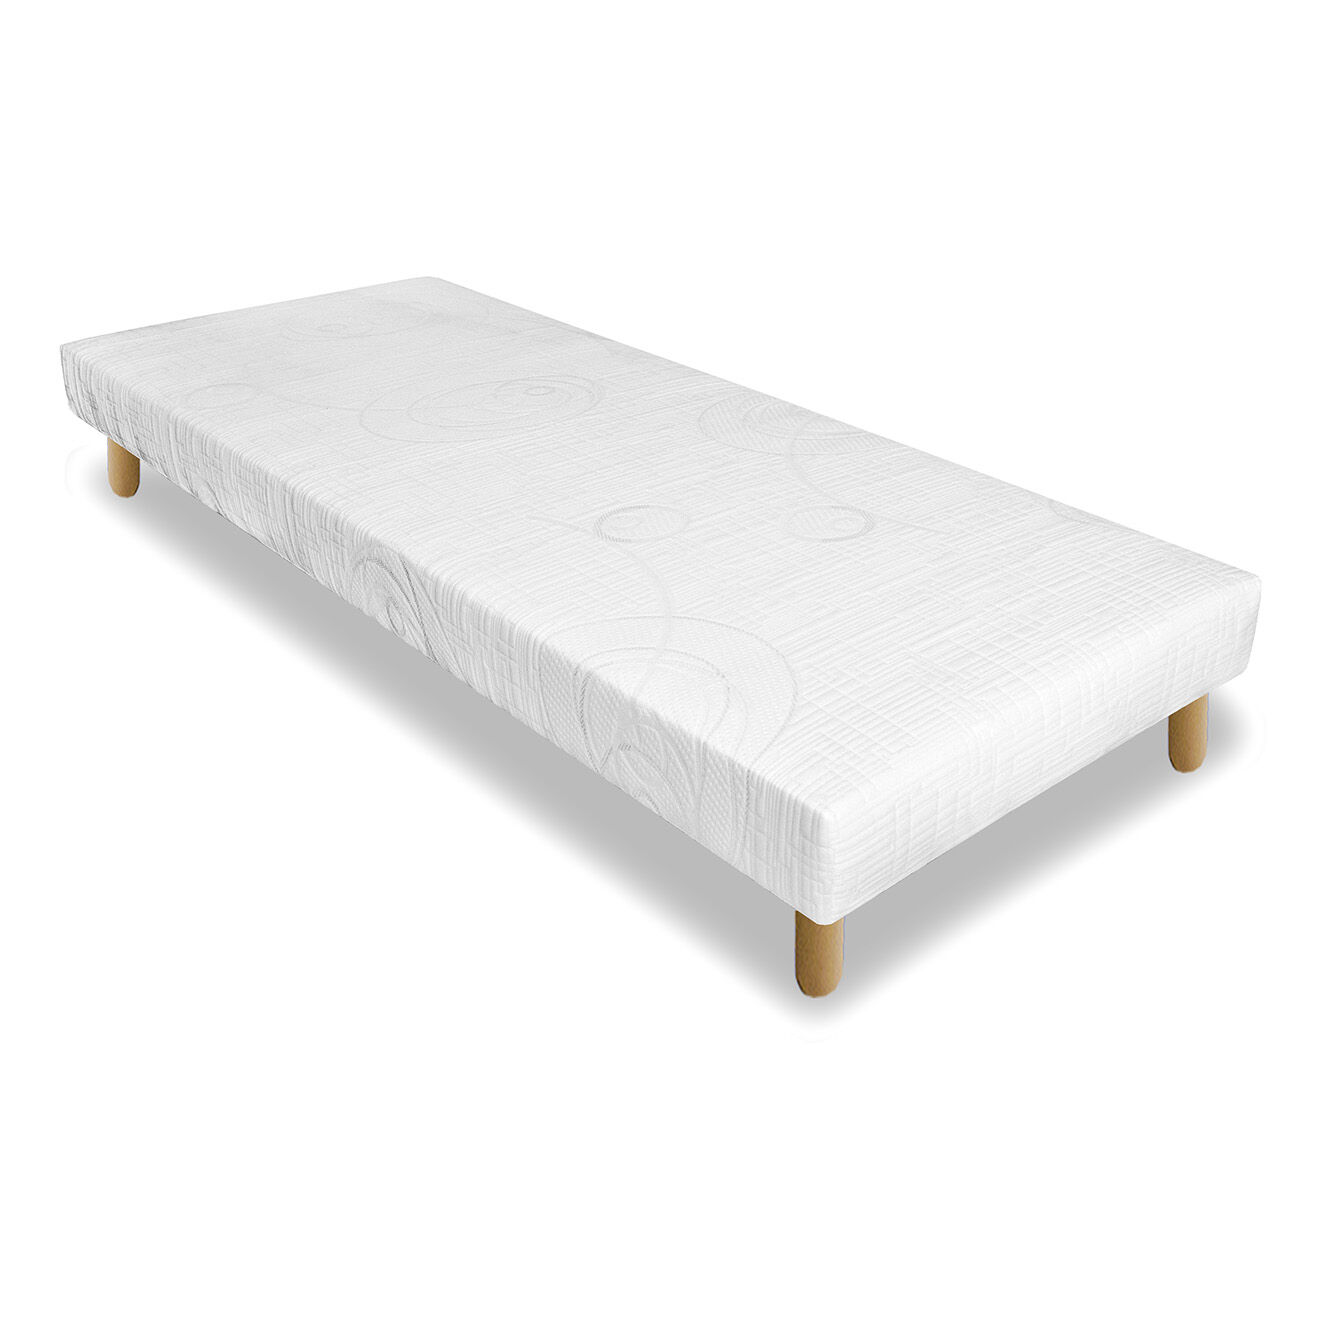 Sommier Confortel blanc - 80x200 cm